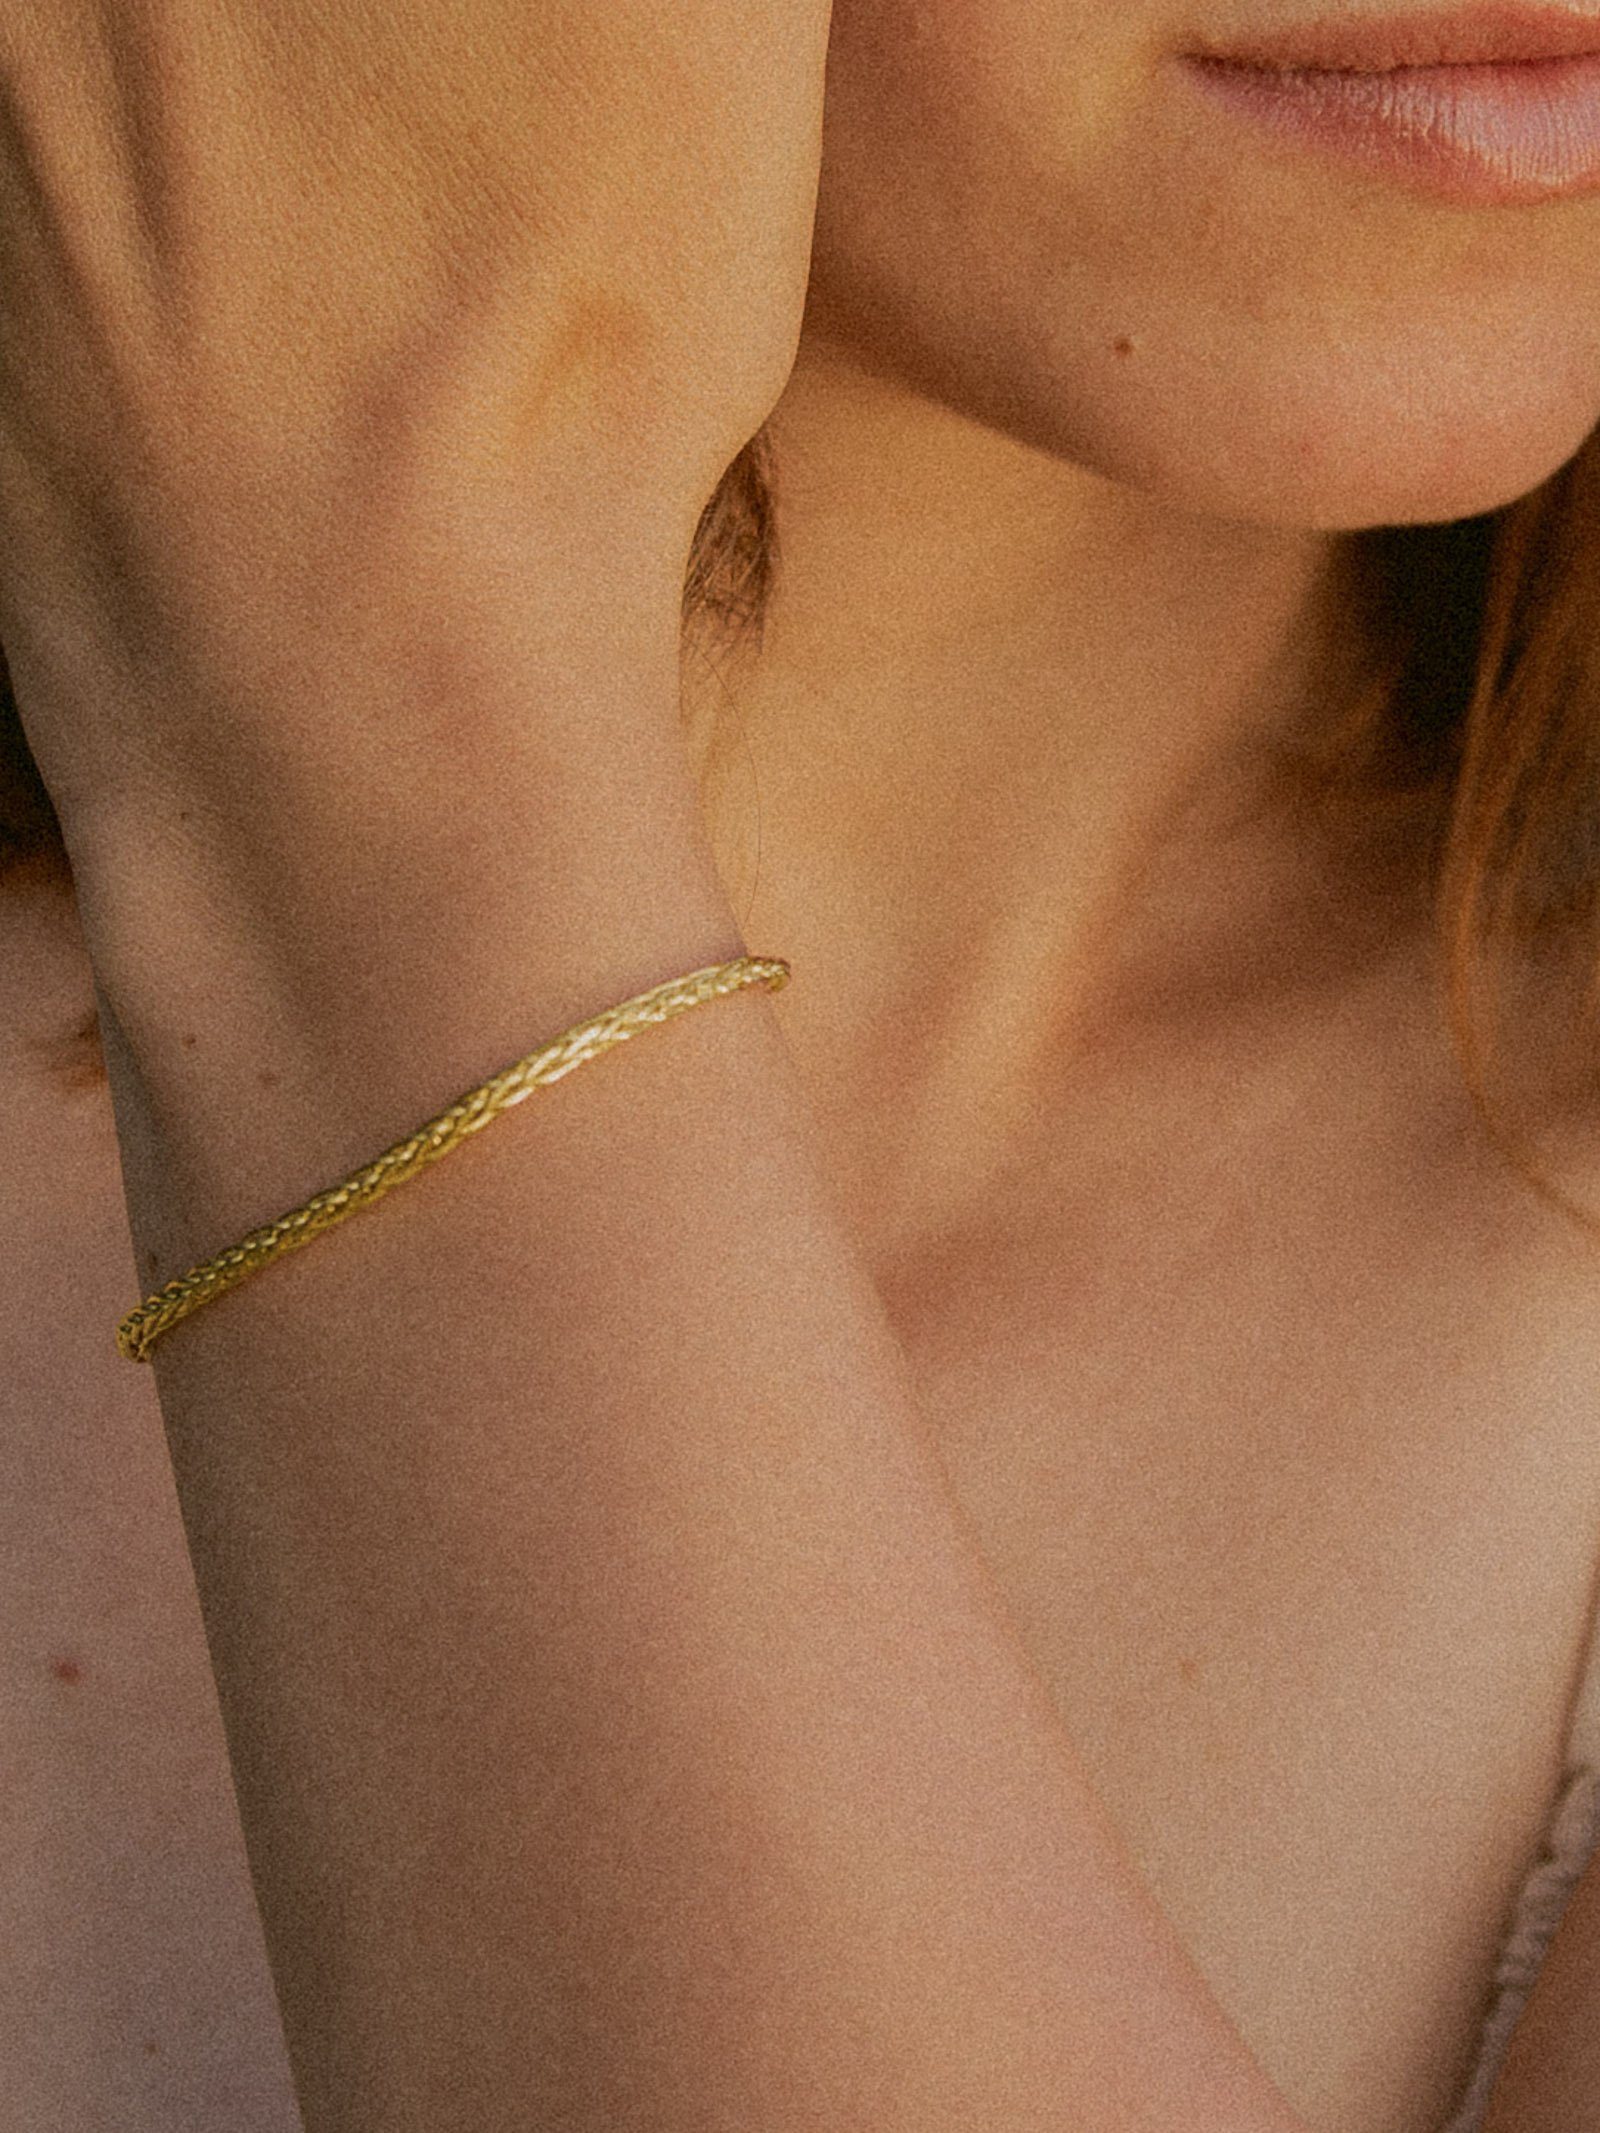 Goldarmband Armkettchen Echtgold, Germany 2,1mm in Zopfkette Armband 19cm, modabilé hohl Damen Armkette, Made 585